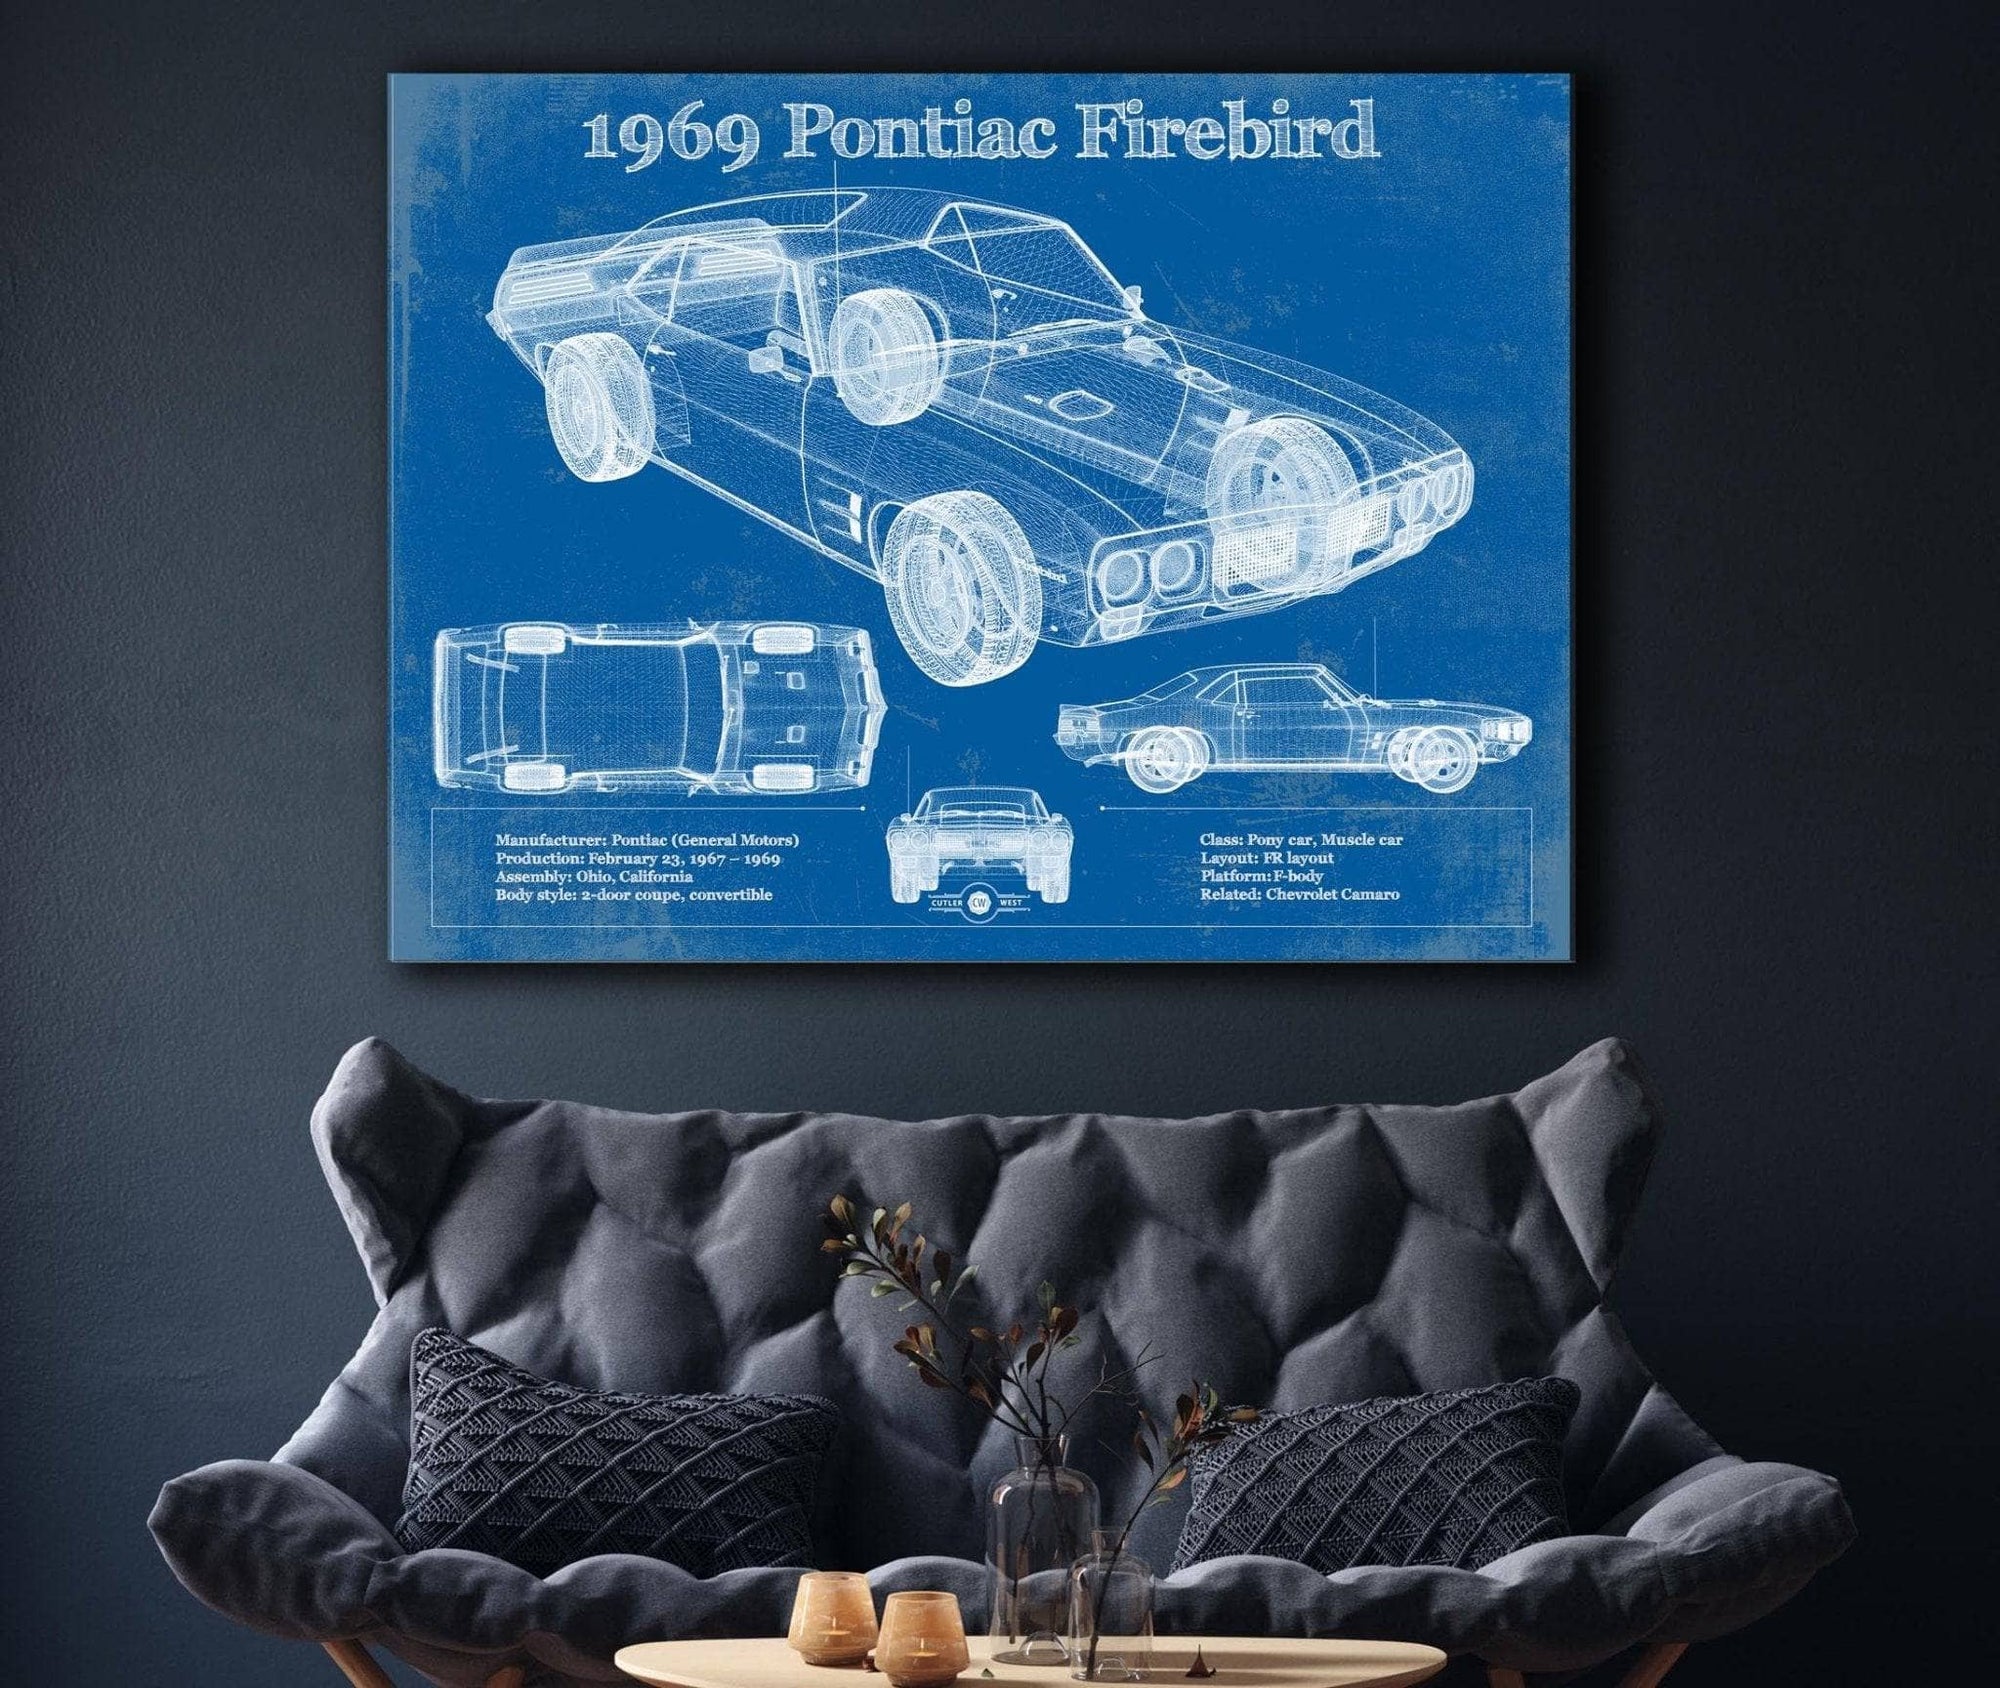 Cutler West Vehicle Collection 1969 Pontiac Firebird 400 Vintage Auto Print